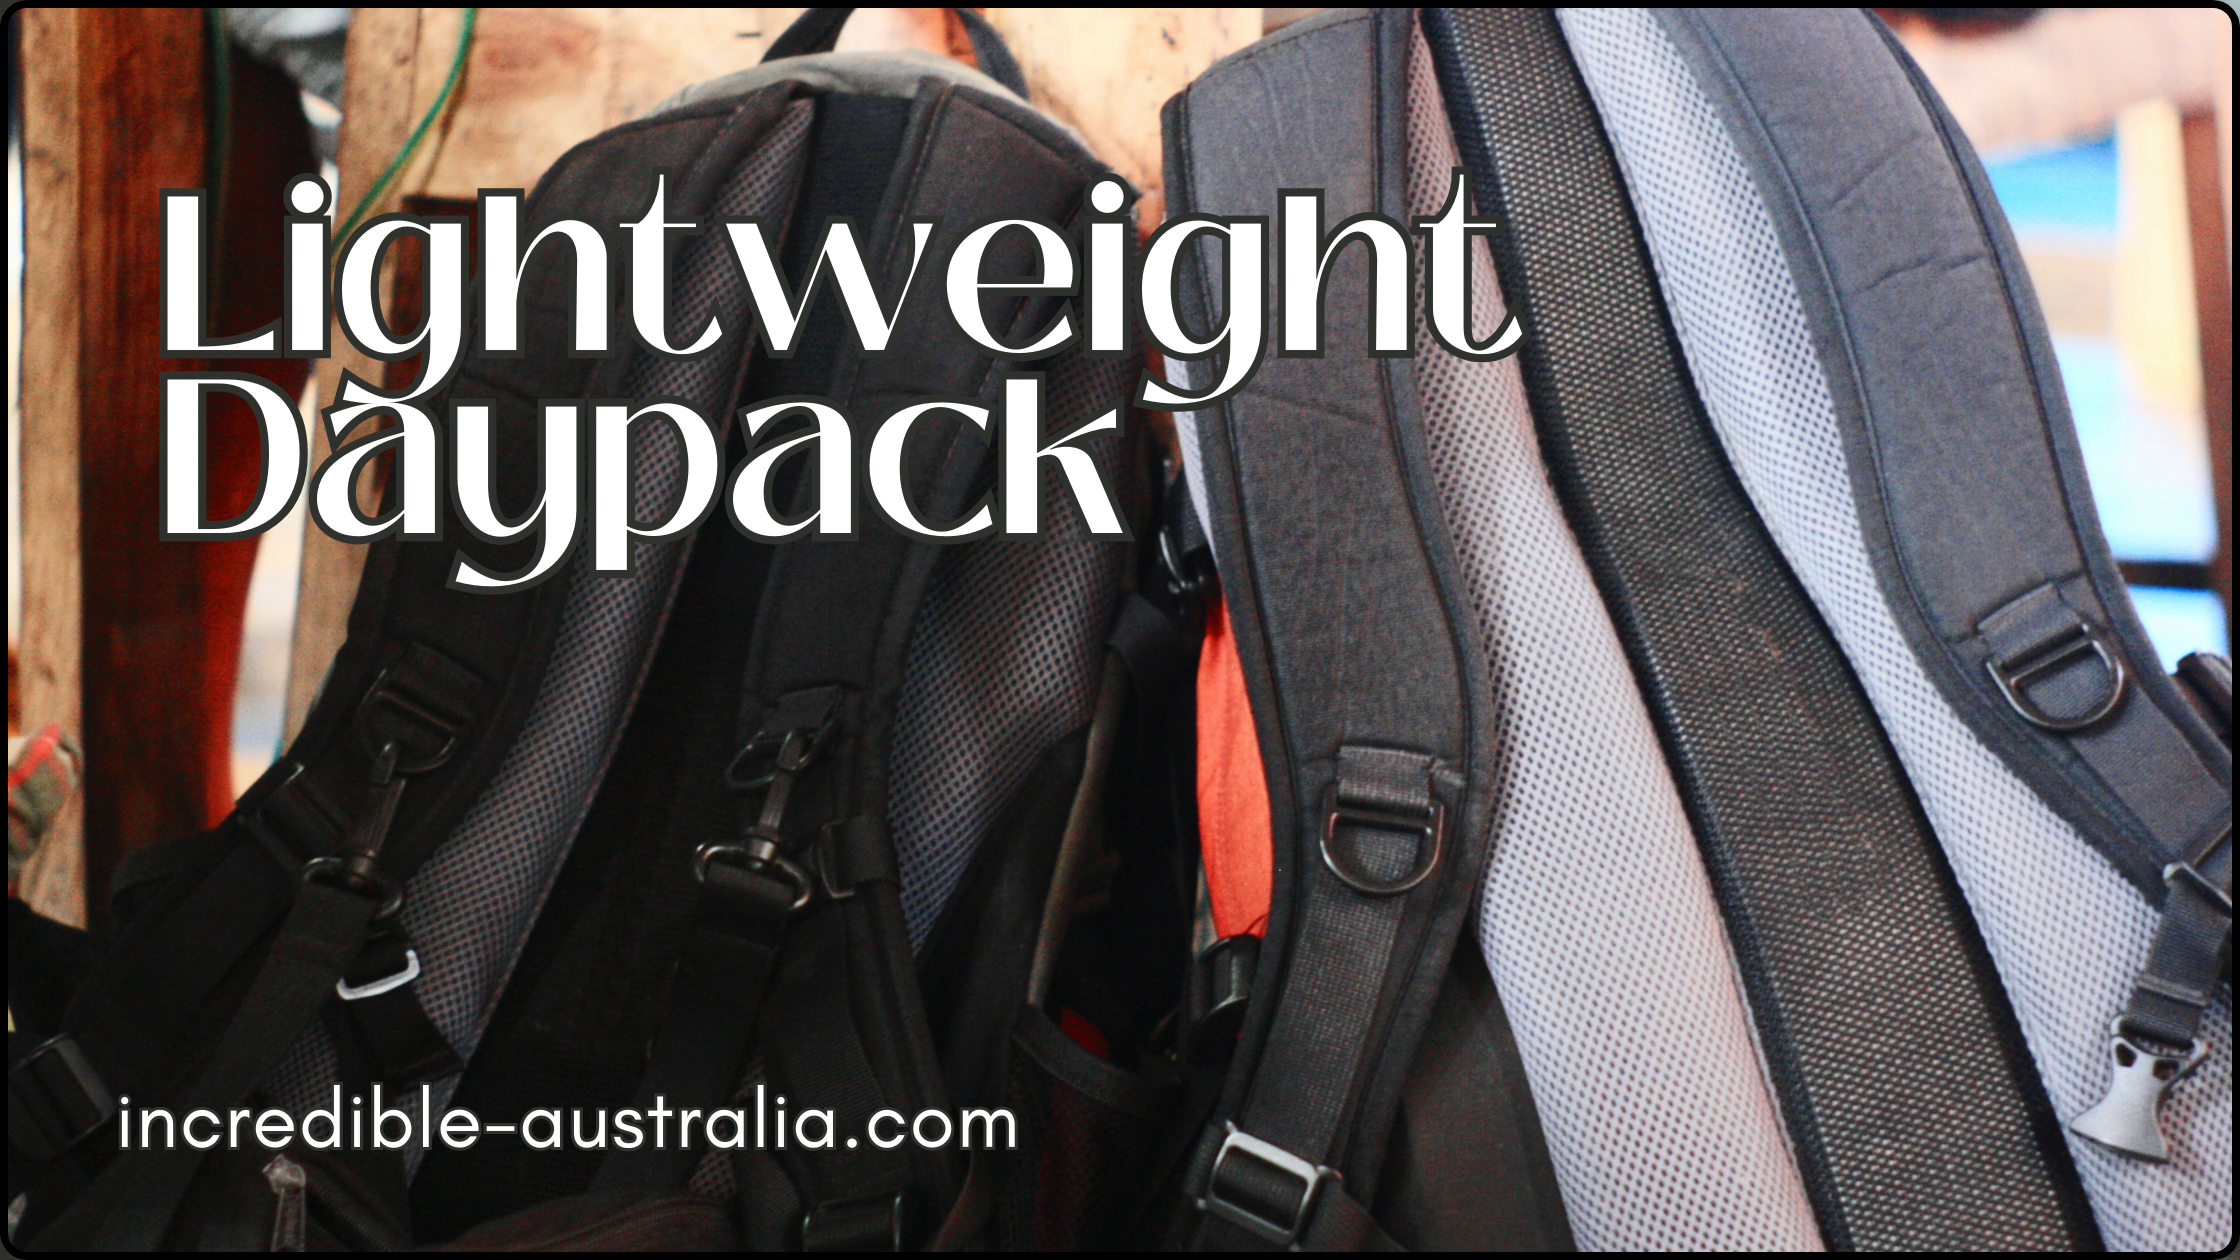 Lightweight Daypack